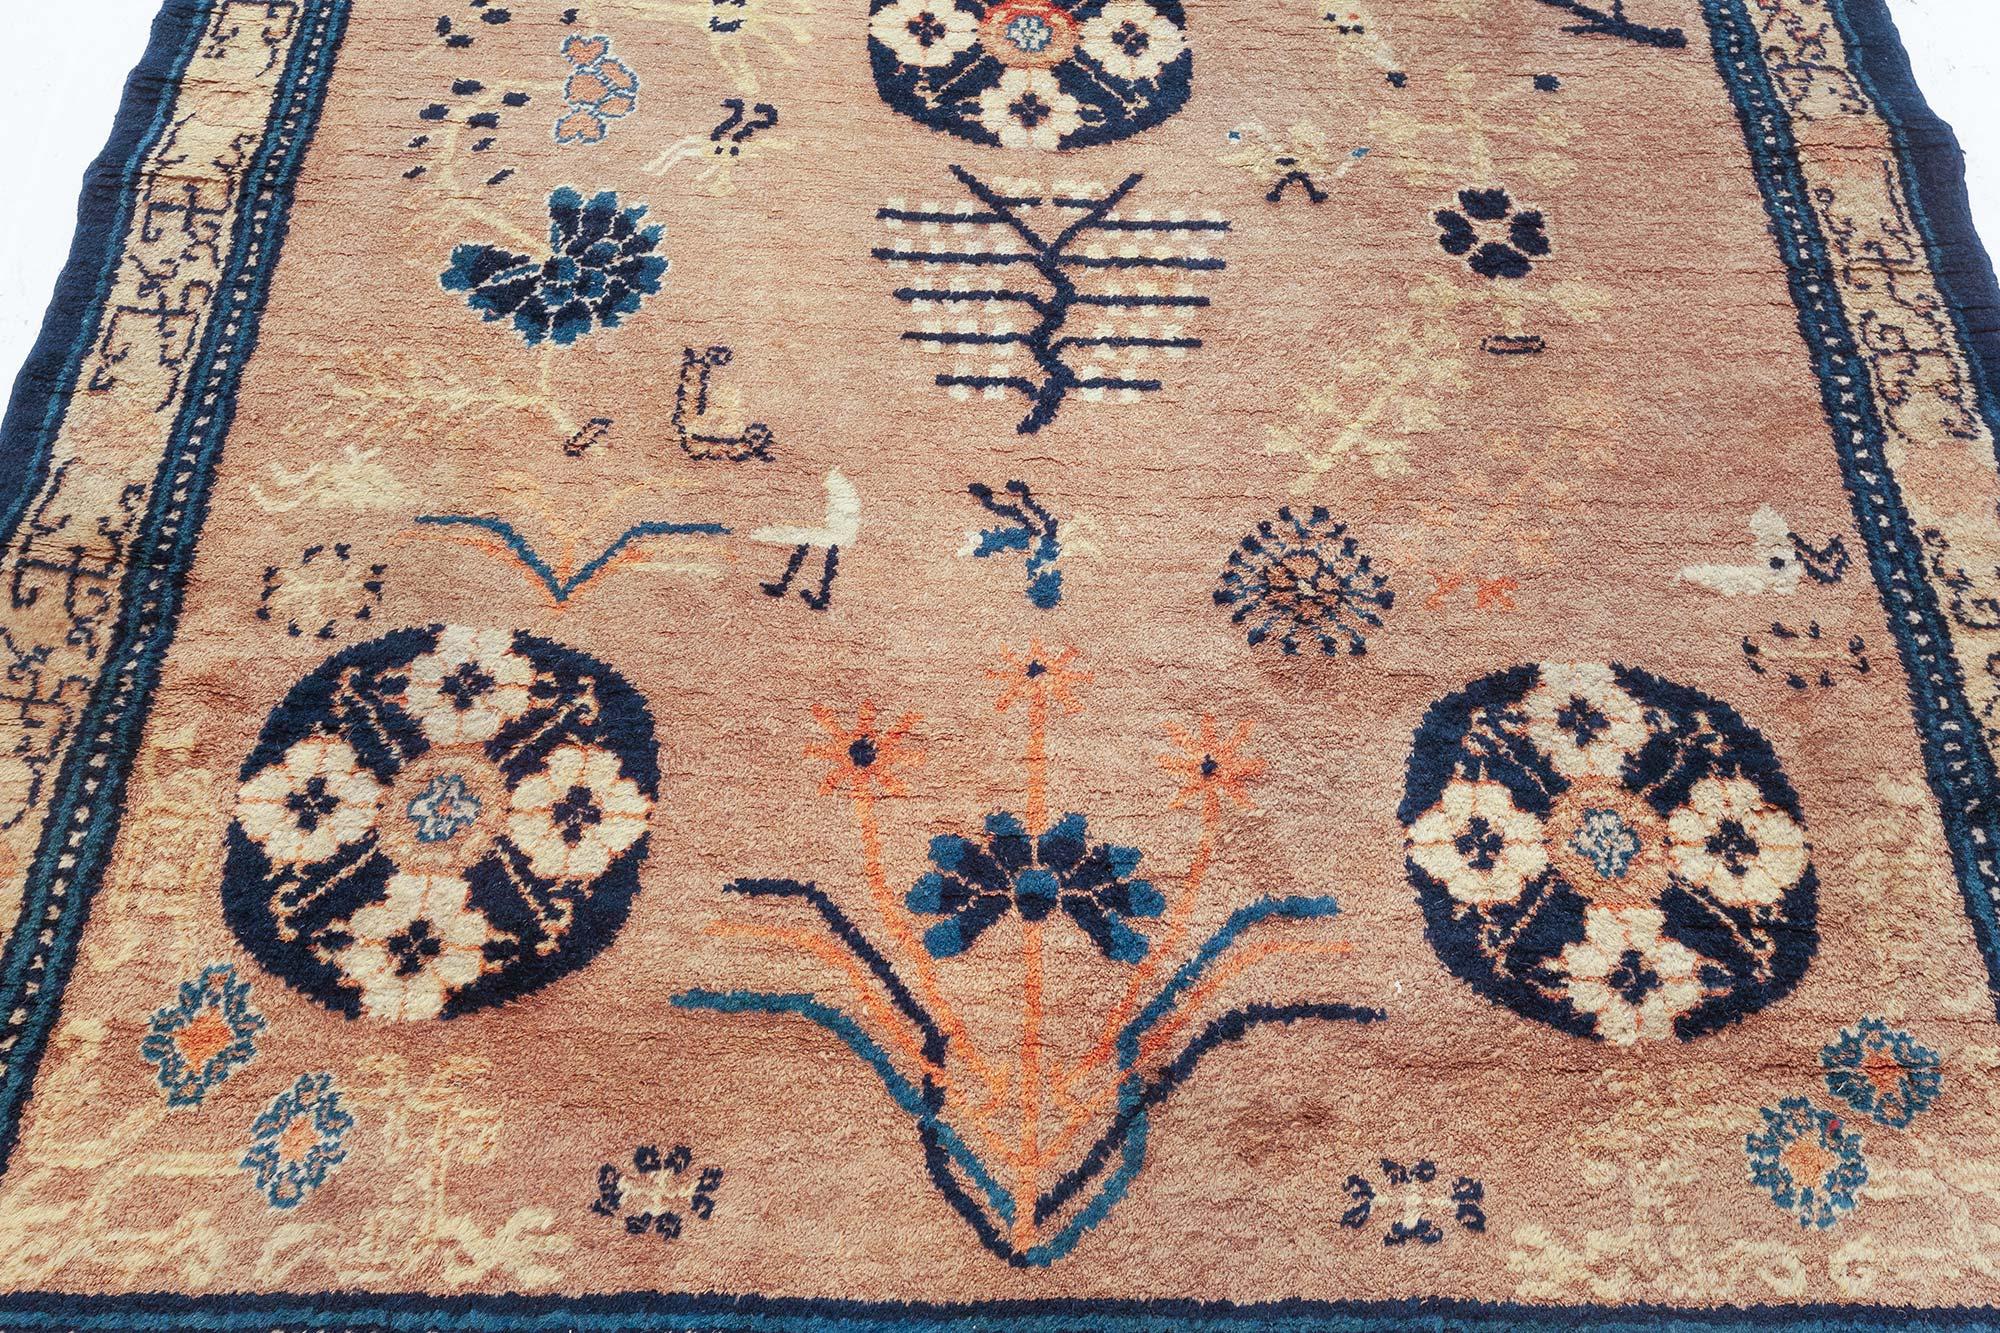 Midcentury Samarkand navy blue and beige handmade wool carpet.
Size: 4'0